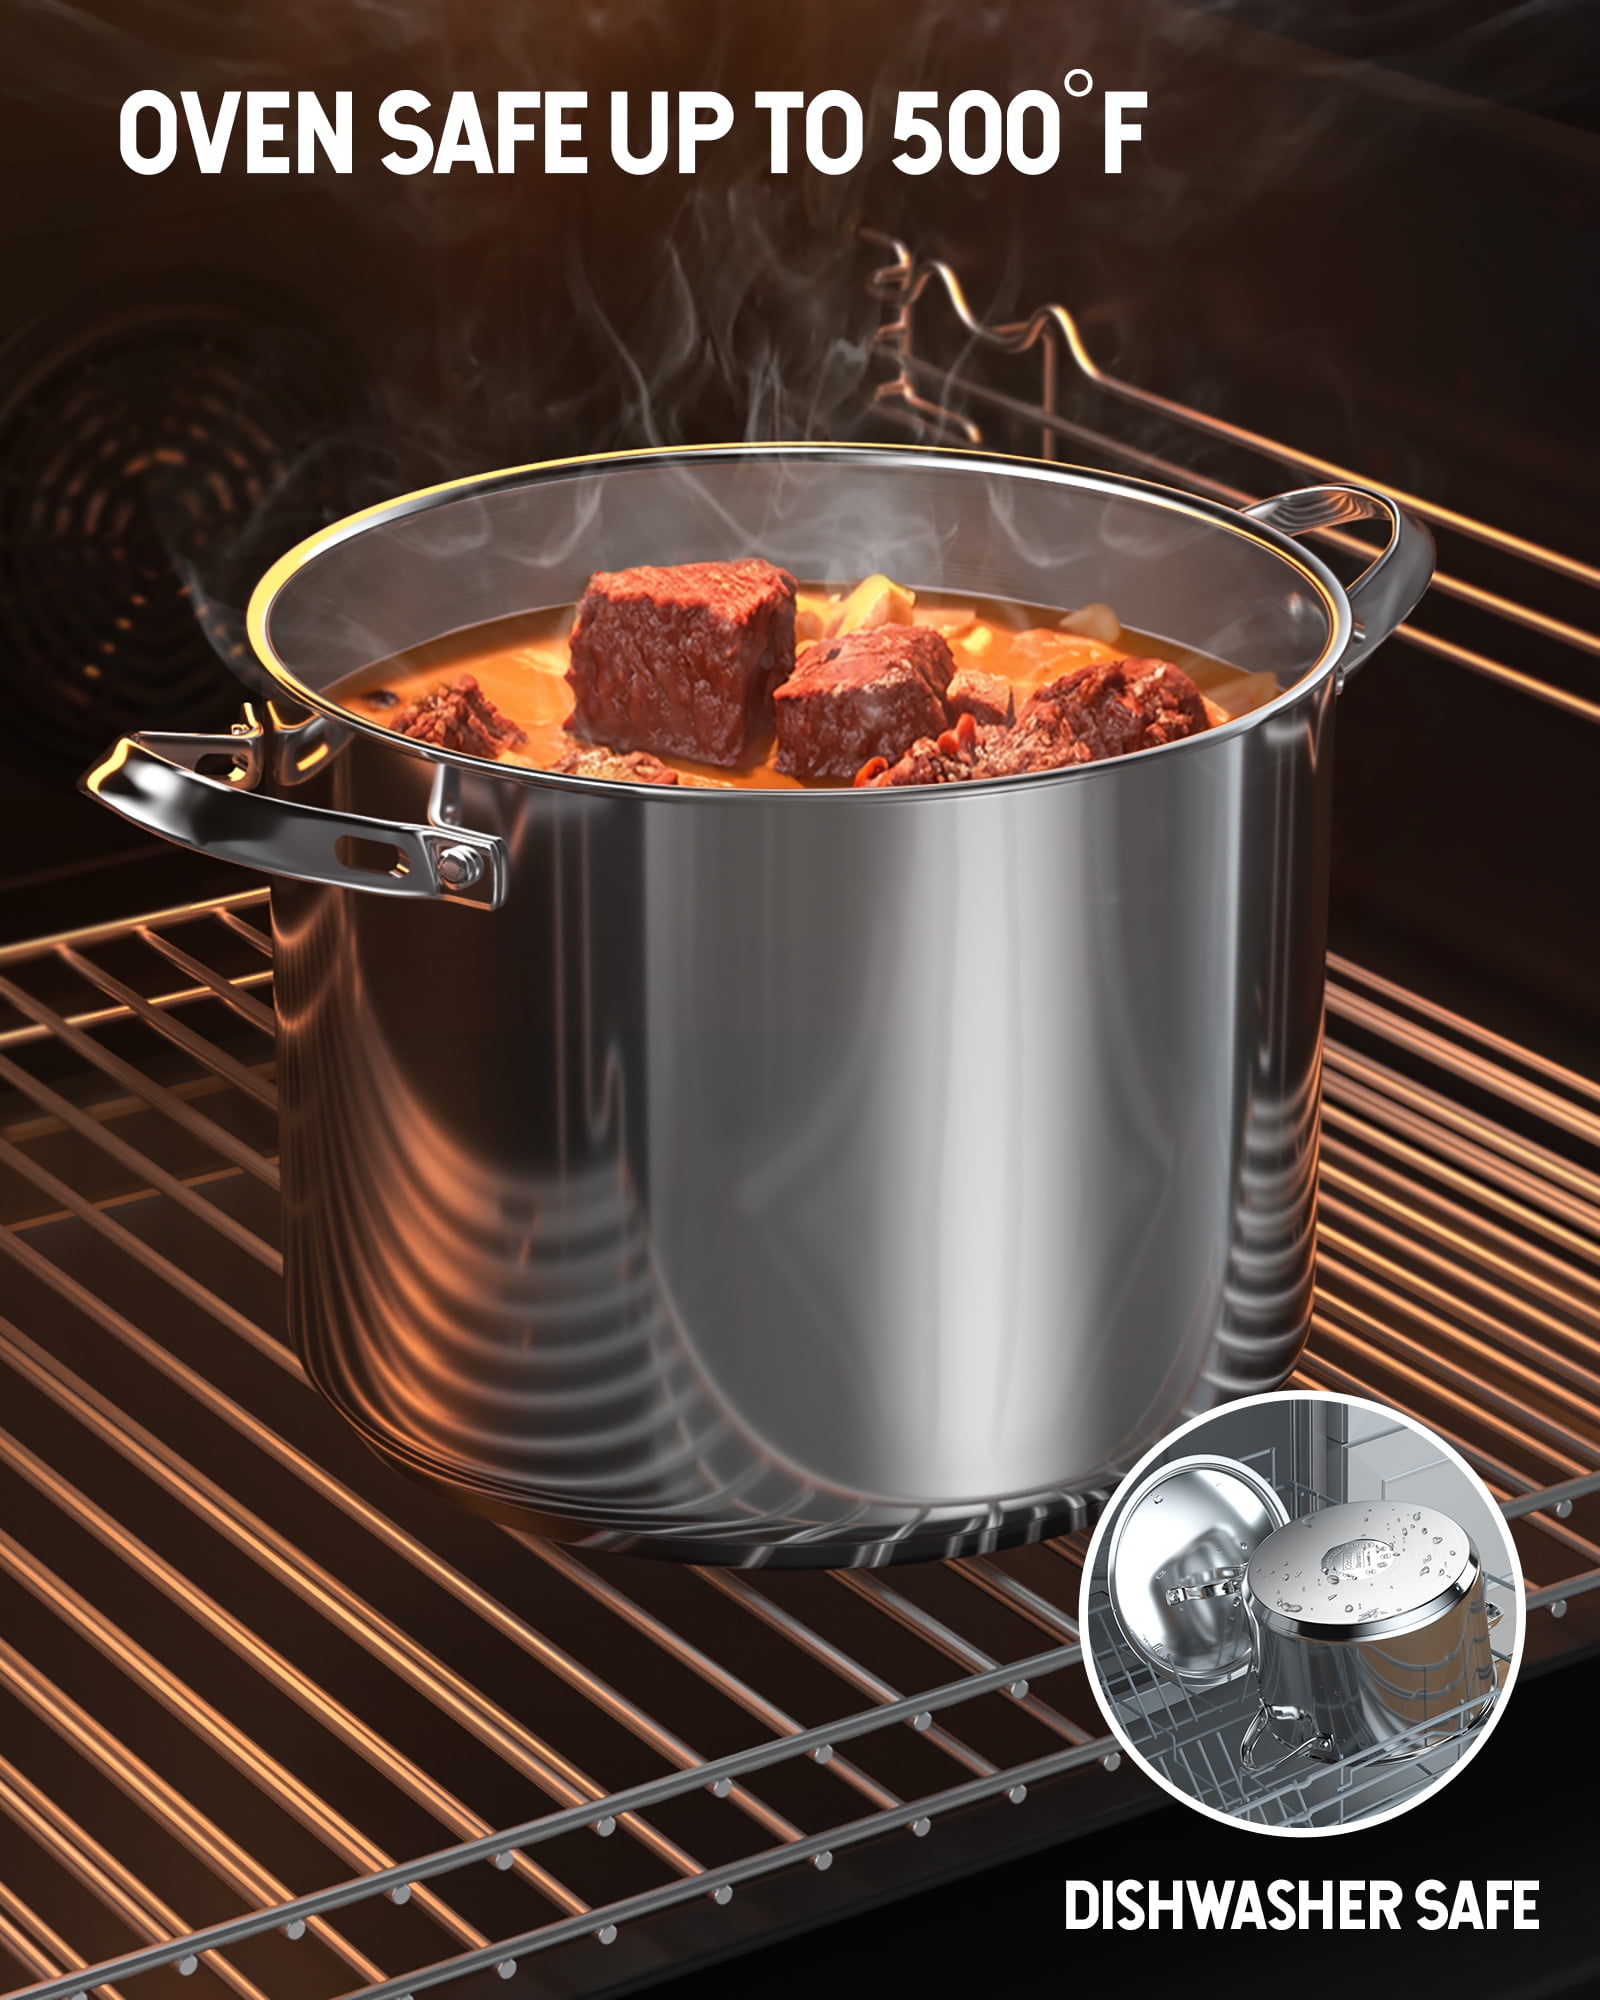 Cook N Home Professional Stainless Steel 8 Quart Stockpot Sauce Pot, 8  quart - Kroger